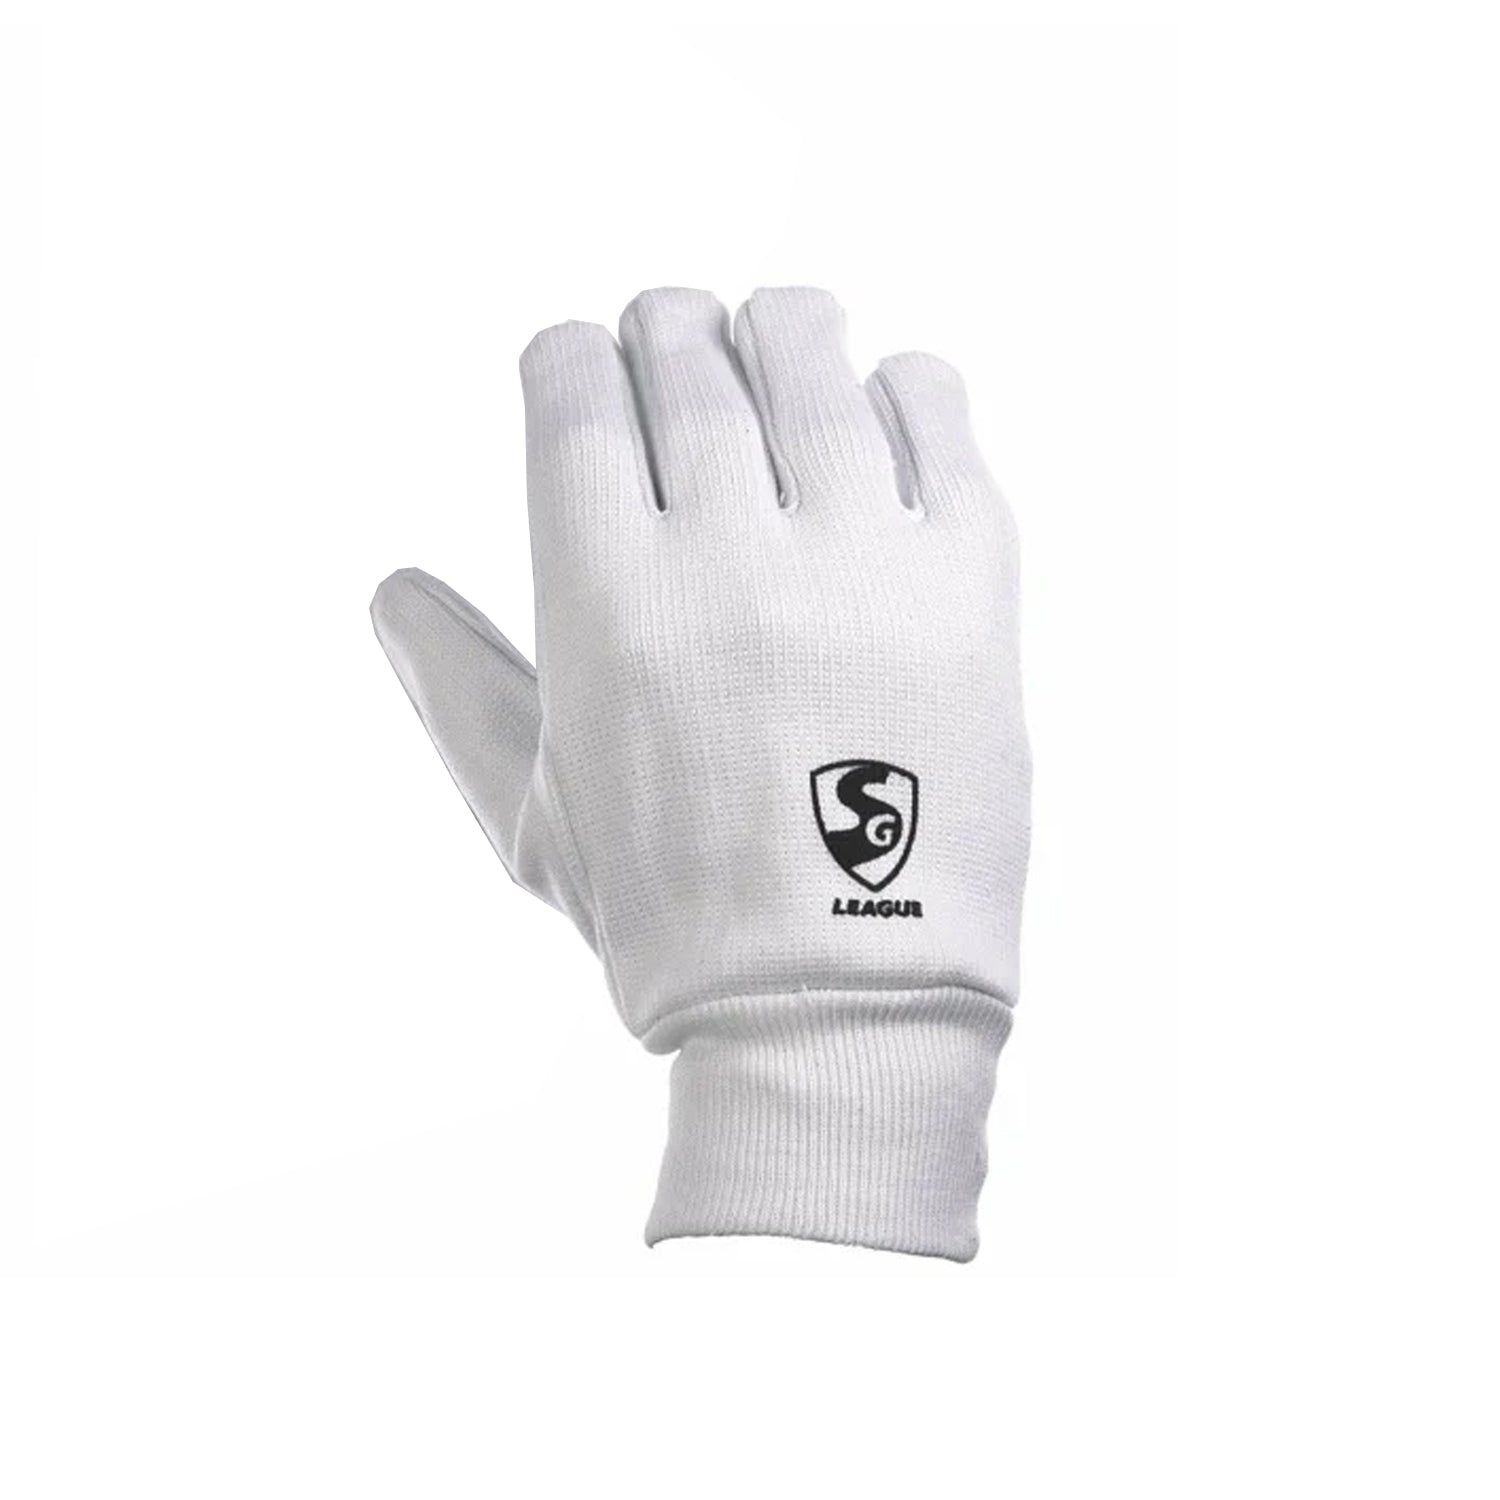 SG League Inner Gloves - Best Price online Prokicksports.com